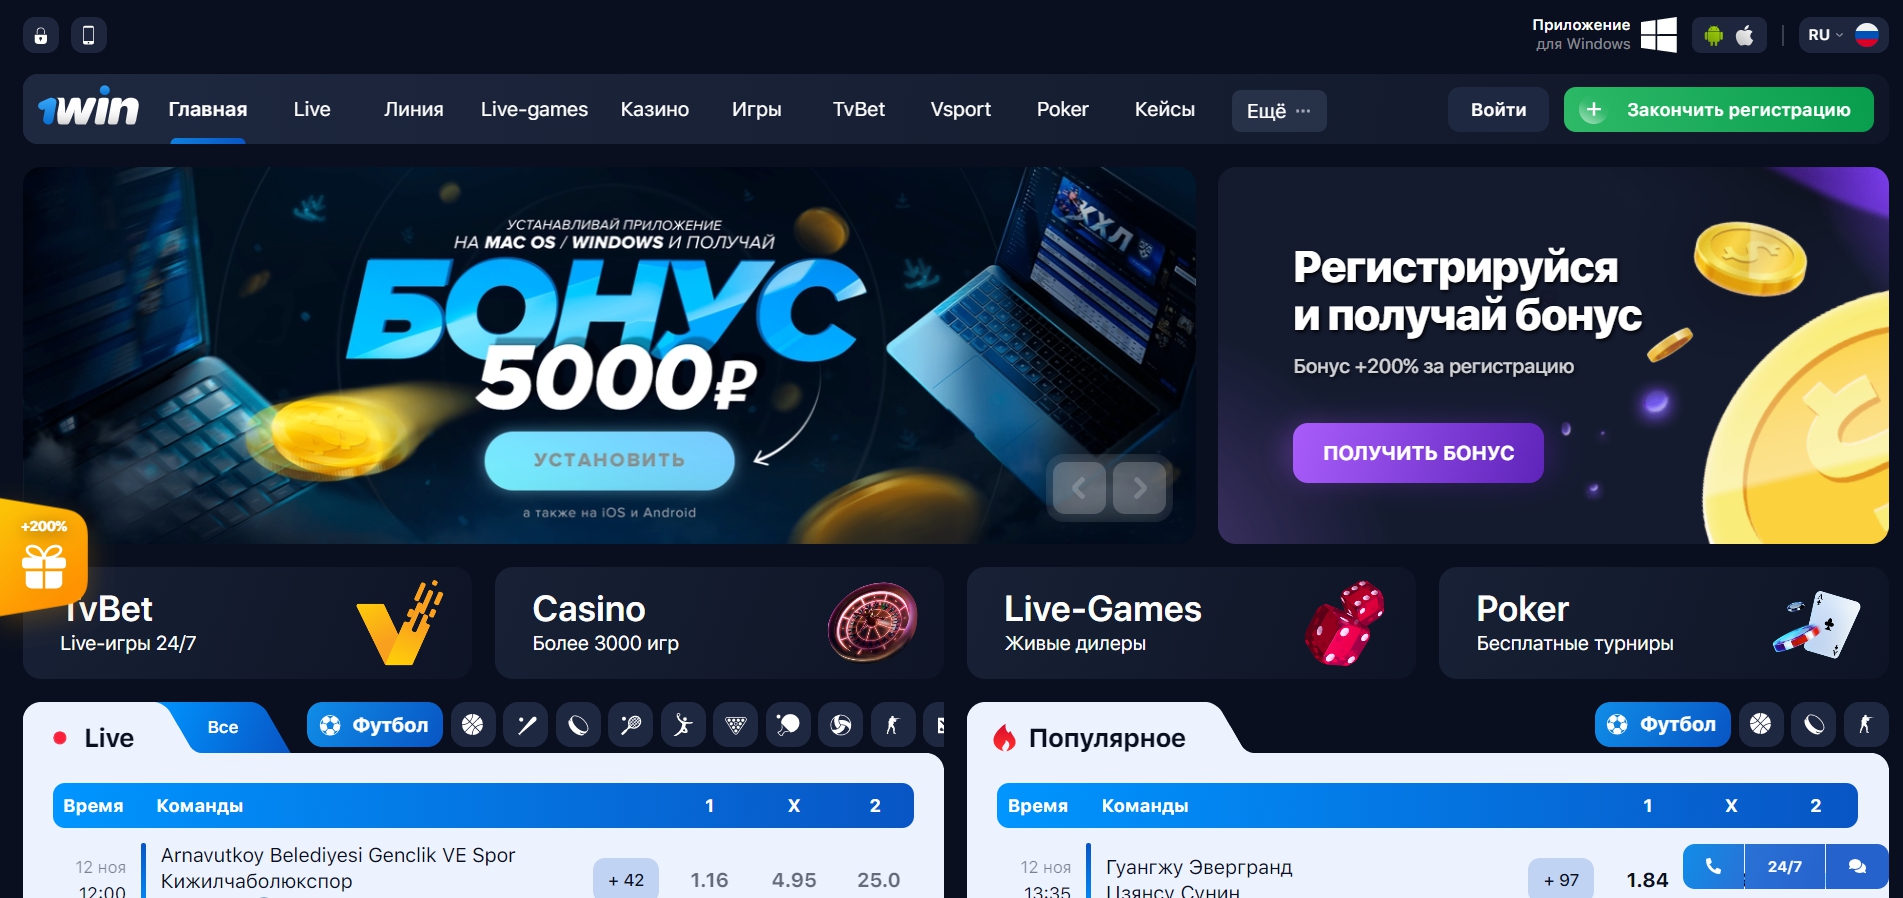 Официальный сайт онлайн казино 1win